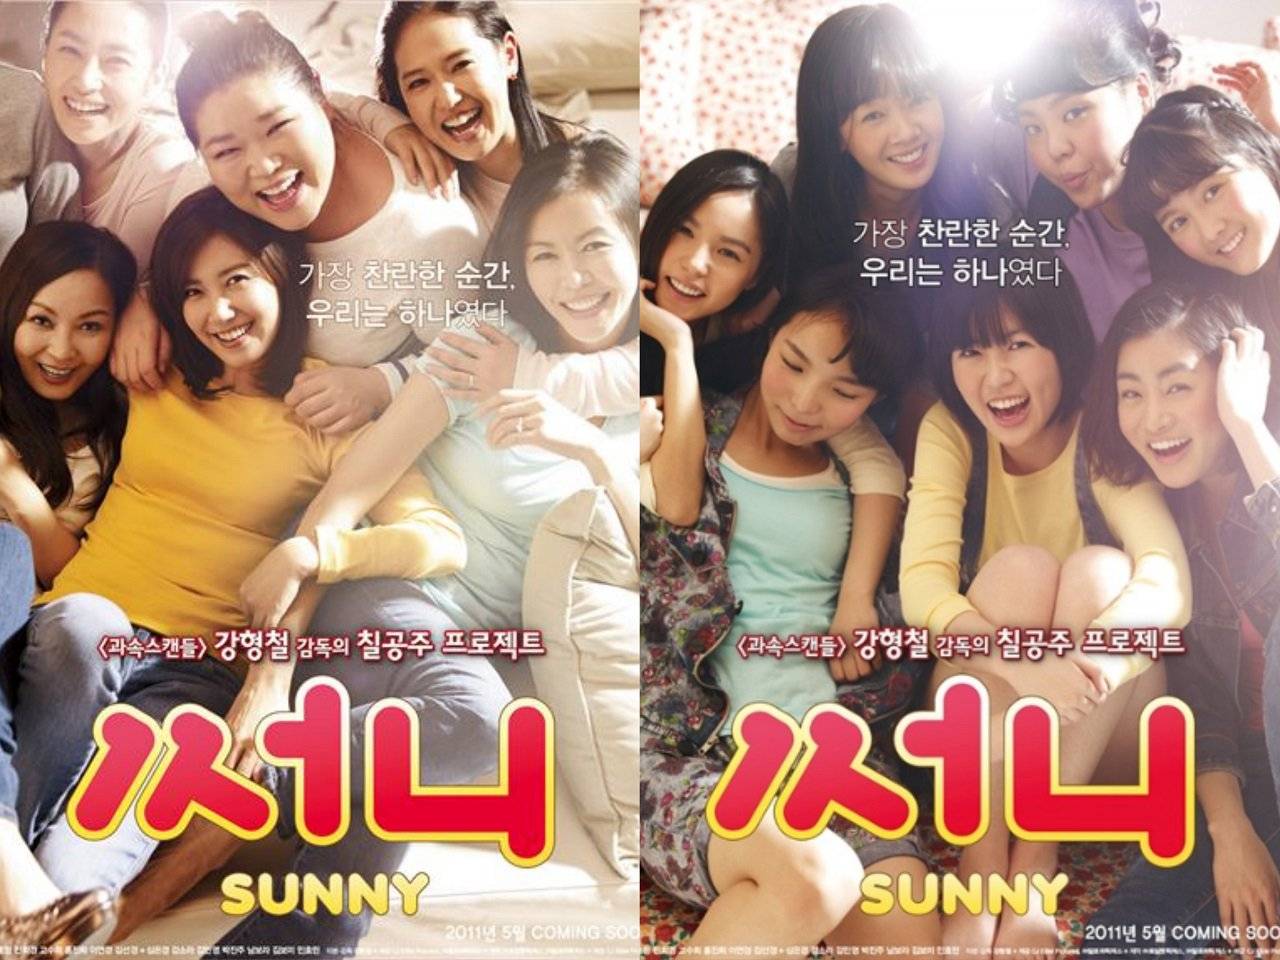 Xem Phim Nhóm Nữ Quái Sunny, Sunny 2011